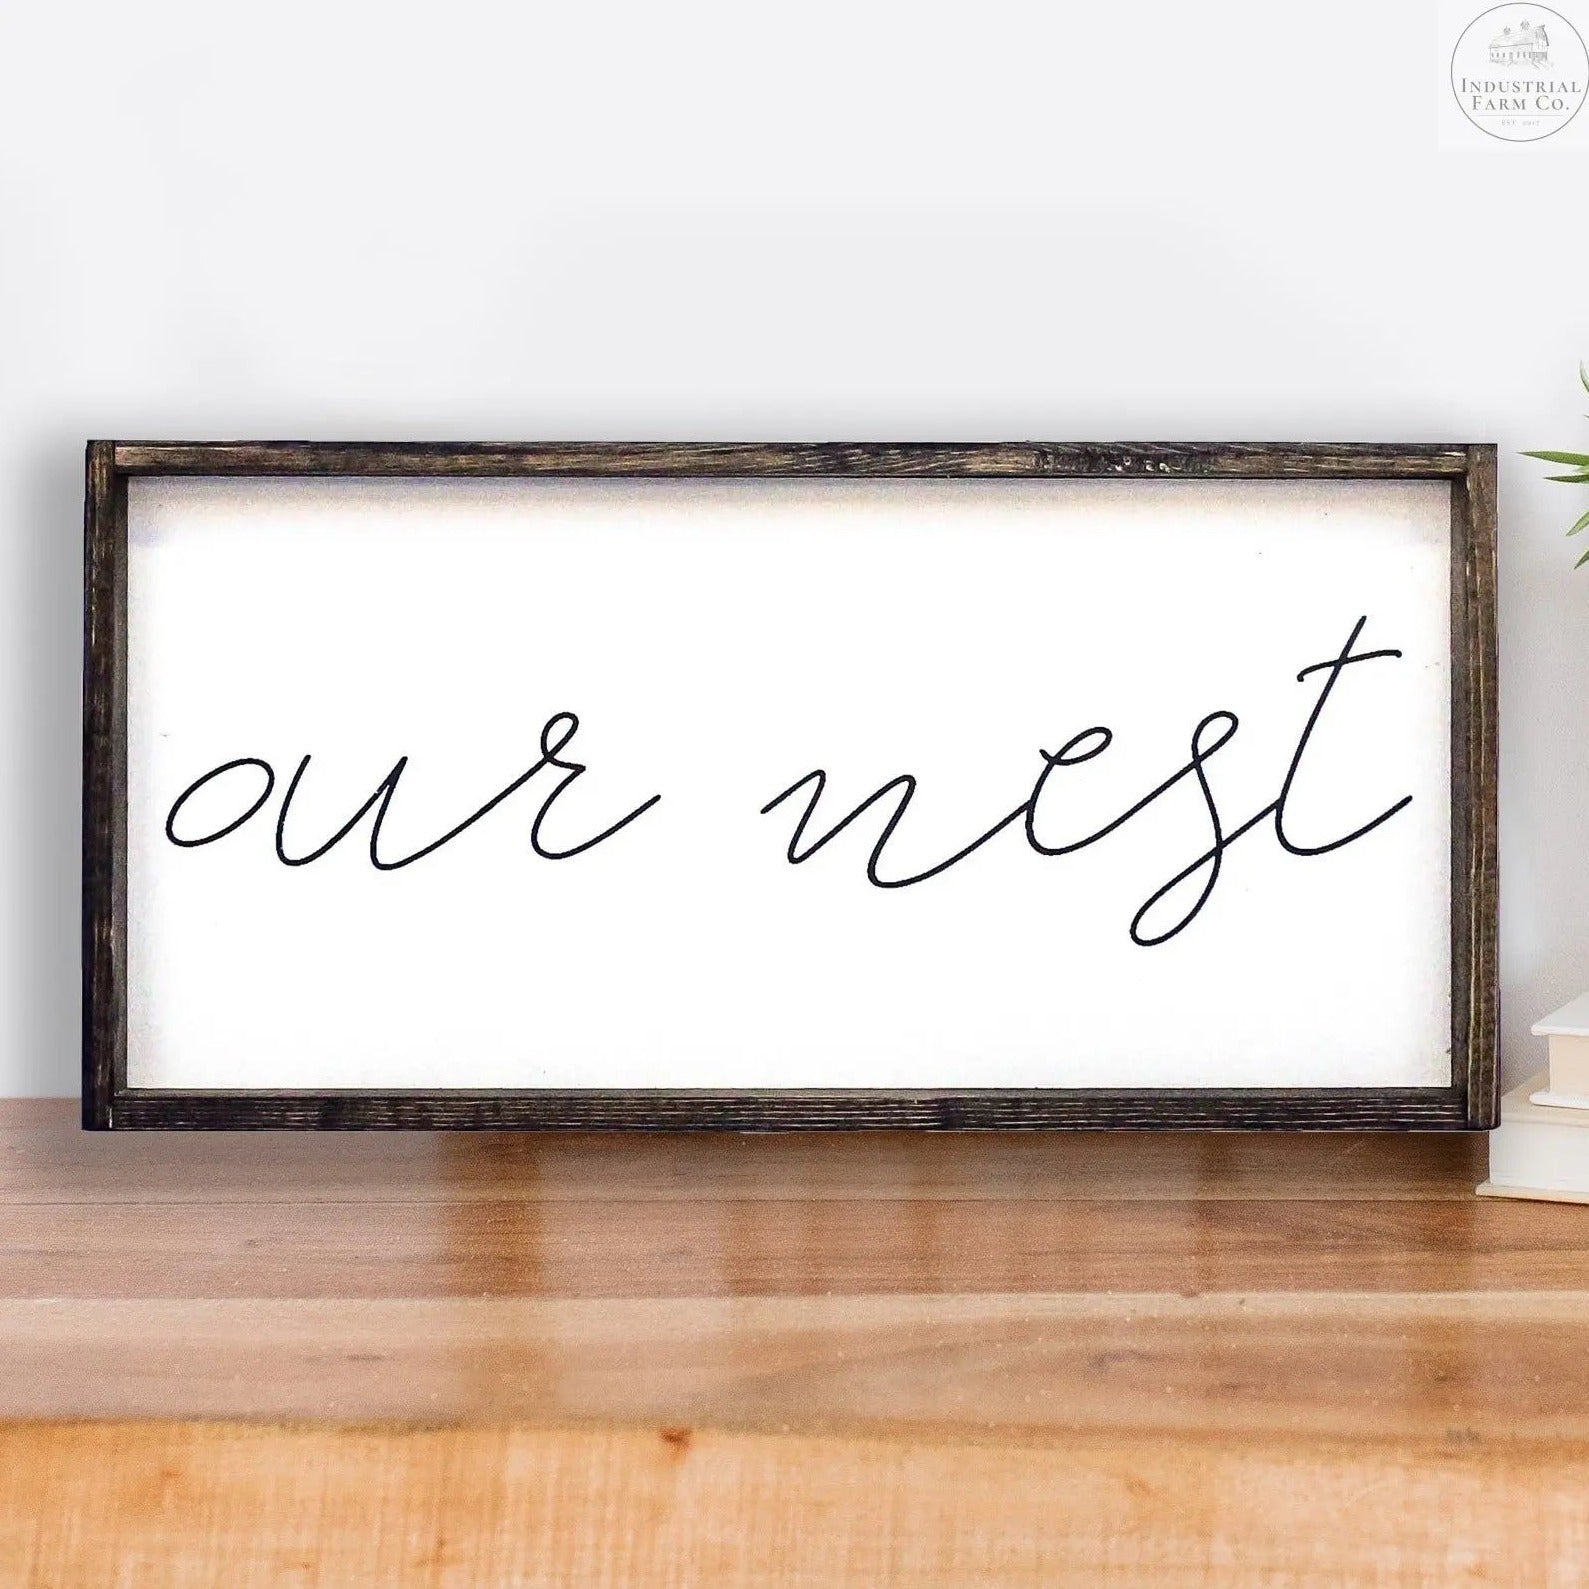 "Our Nest" Wood Sign Framed Sign    | Industrial Farm Co